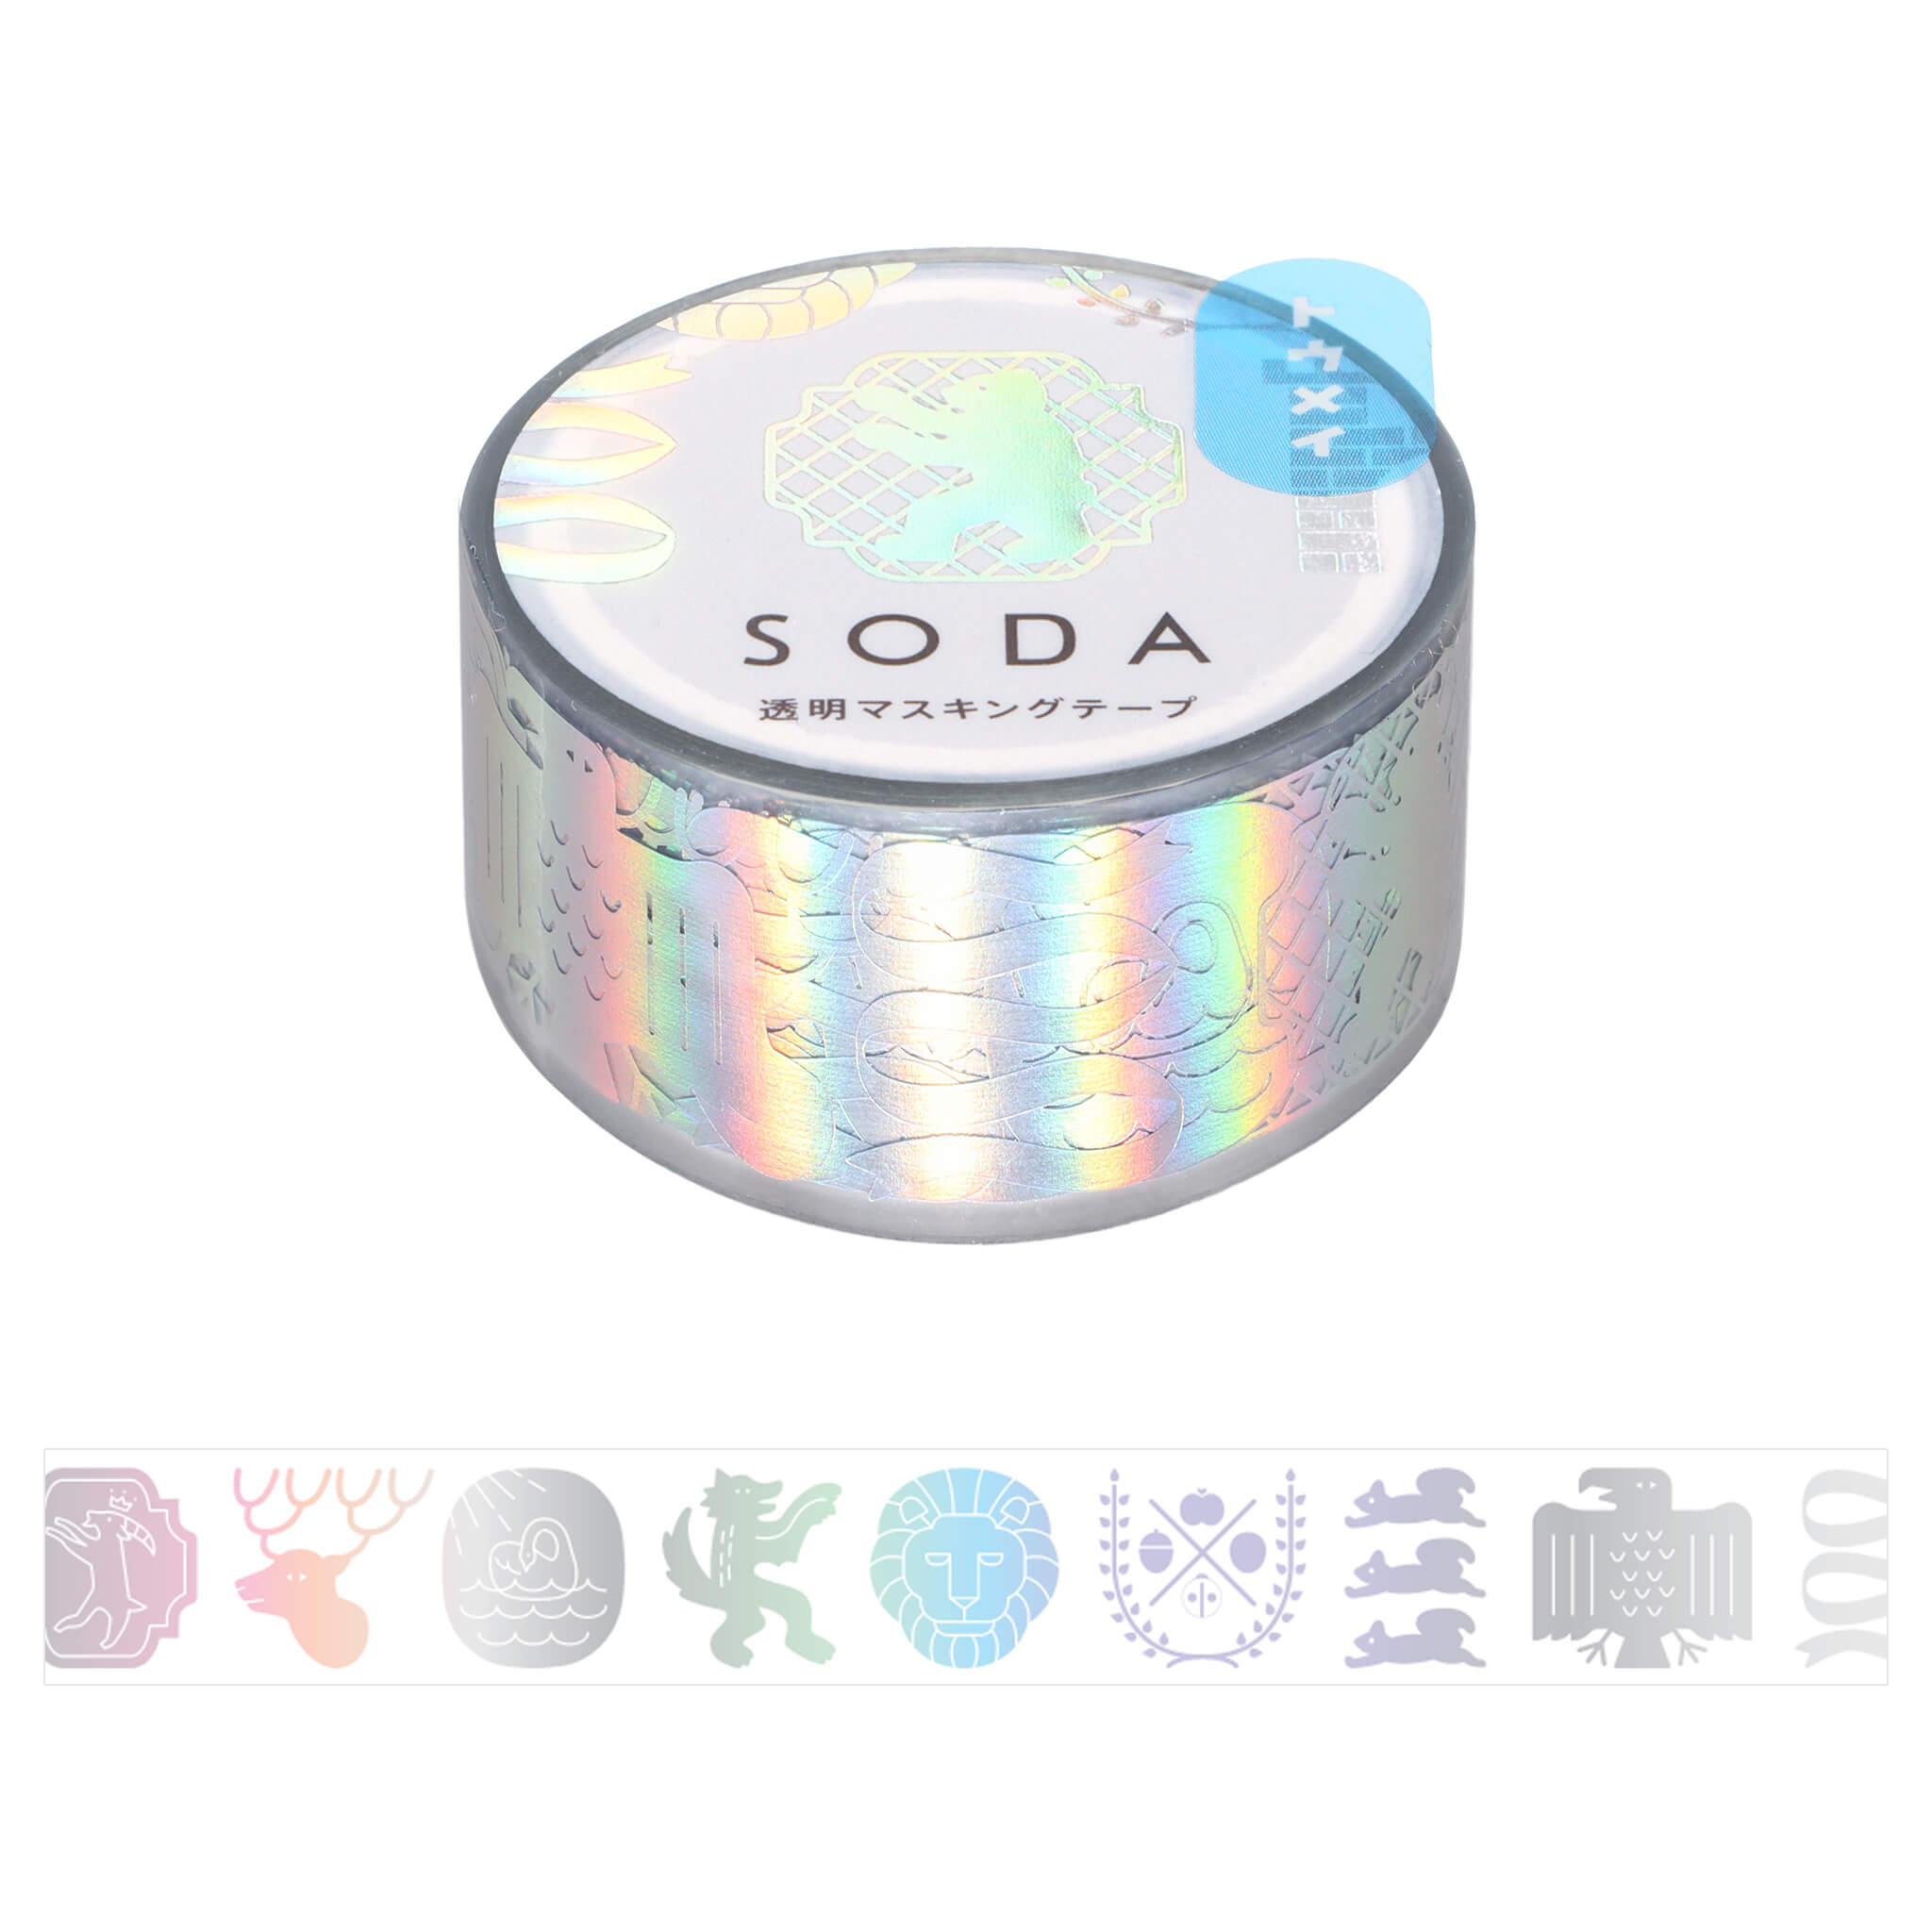 SODA エンブレム (20mm) CMTH20-003 (オーロラ箔) 透明 マスキング